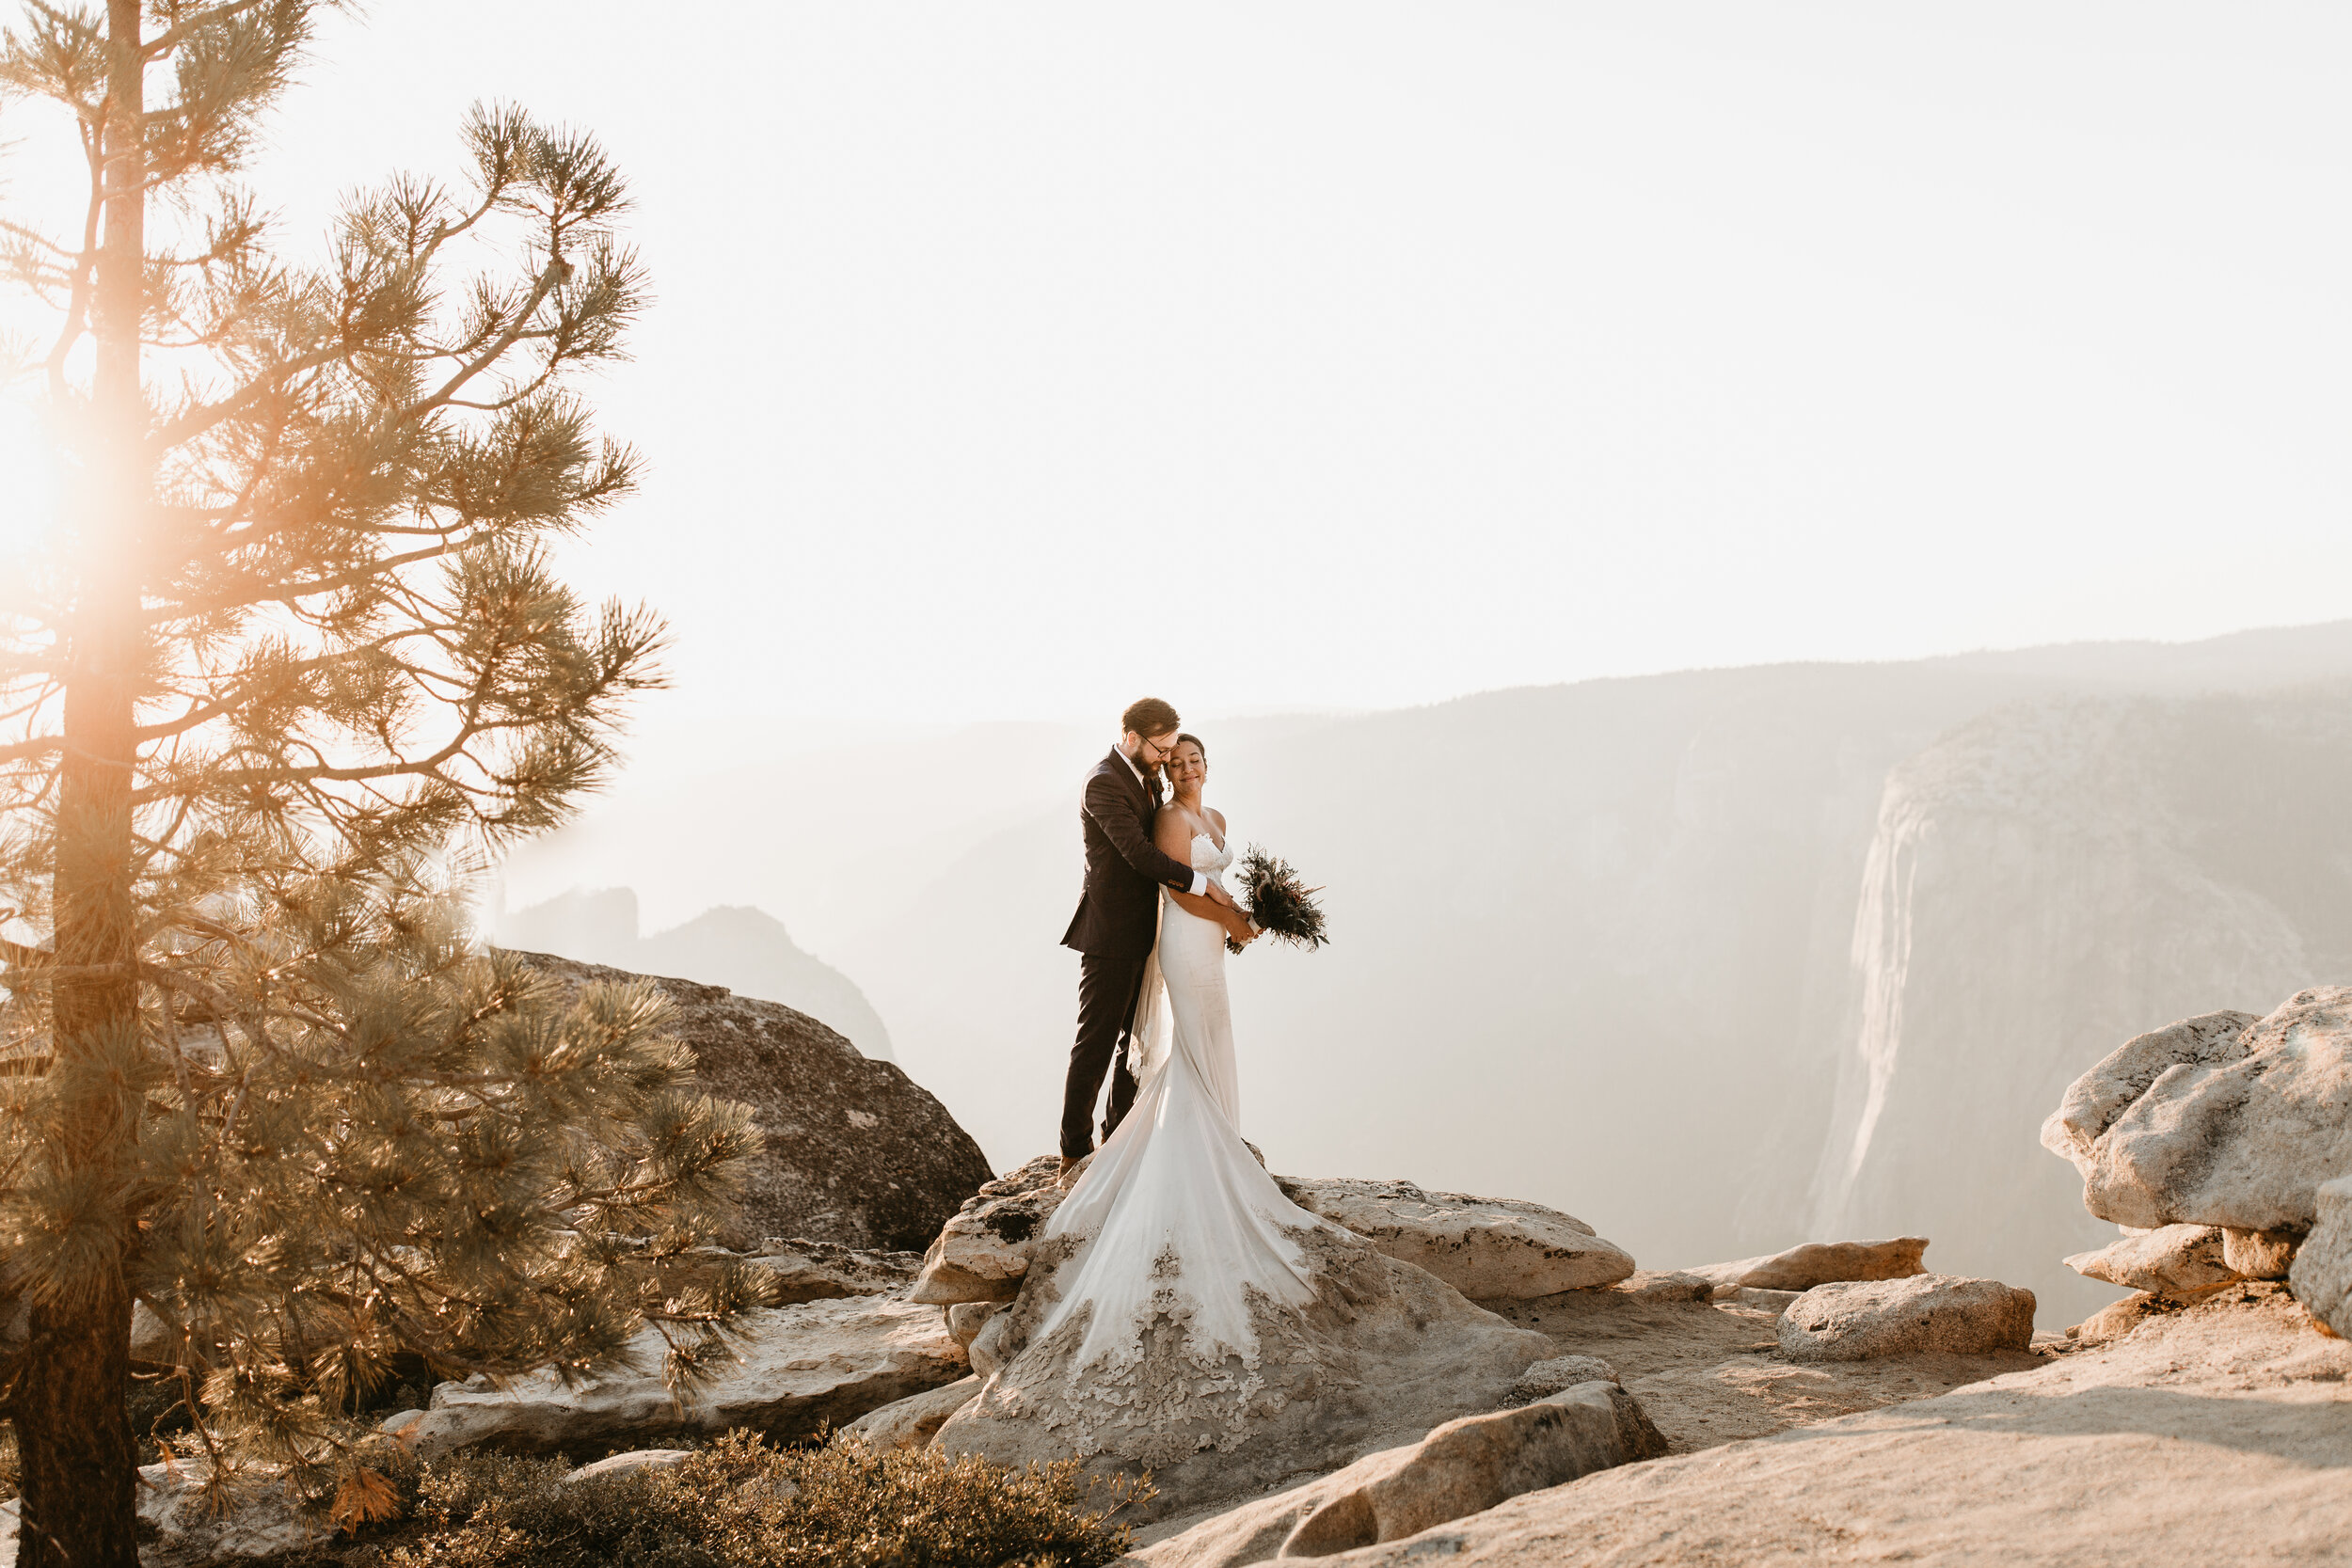 Nicole-Daacke-Photography-yosemite-national-park-elopement-photography-adventure-elopement-in-yosemite-taft-point-sunset-elopement-photographs-california-intimate-destination-wedding-in-yosemite-national-park-9320.jpg